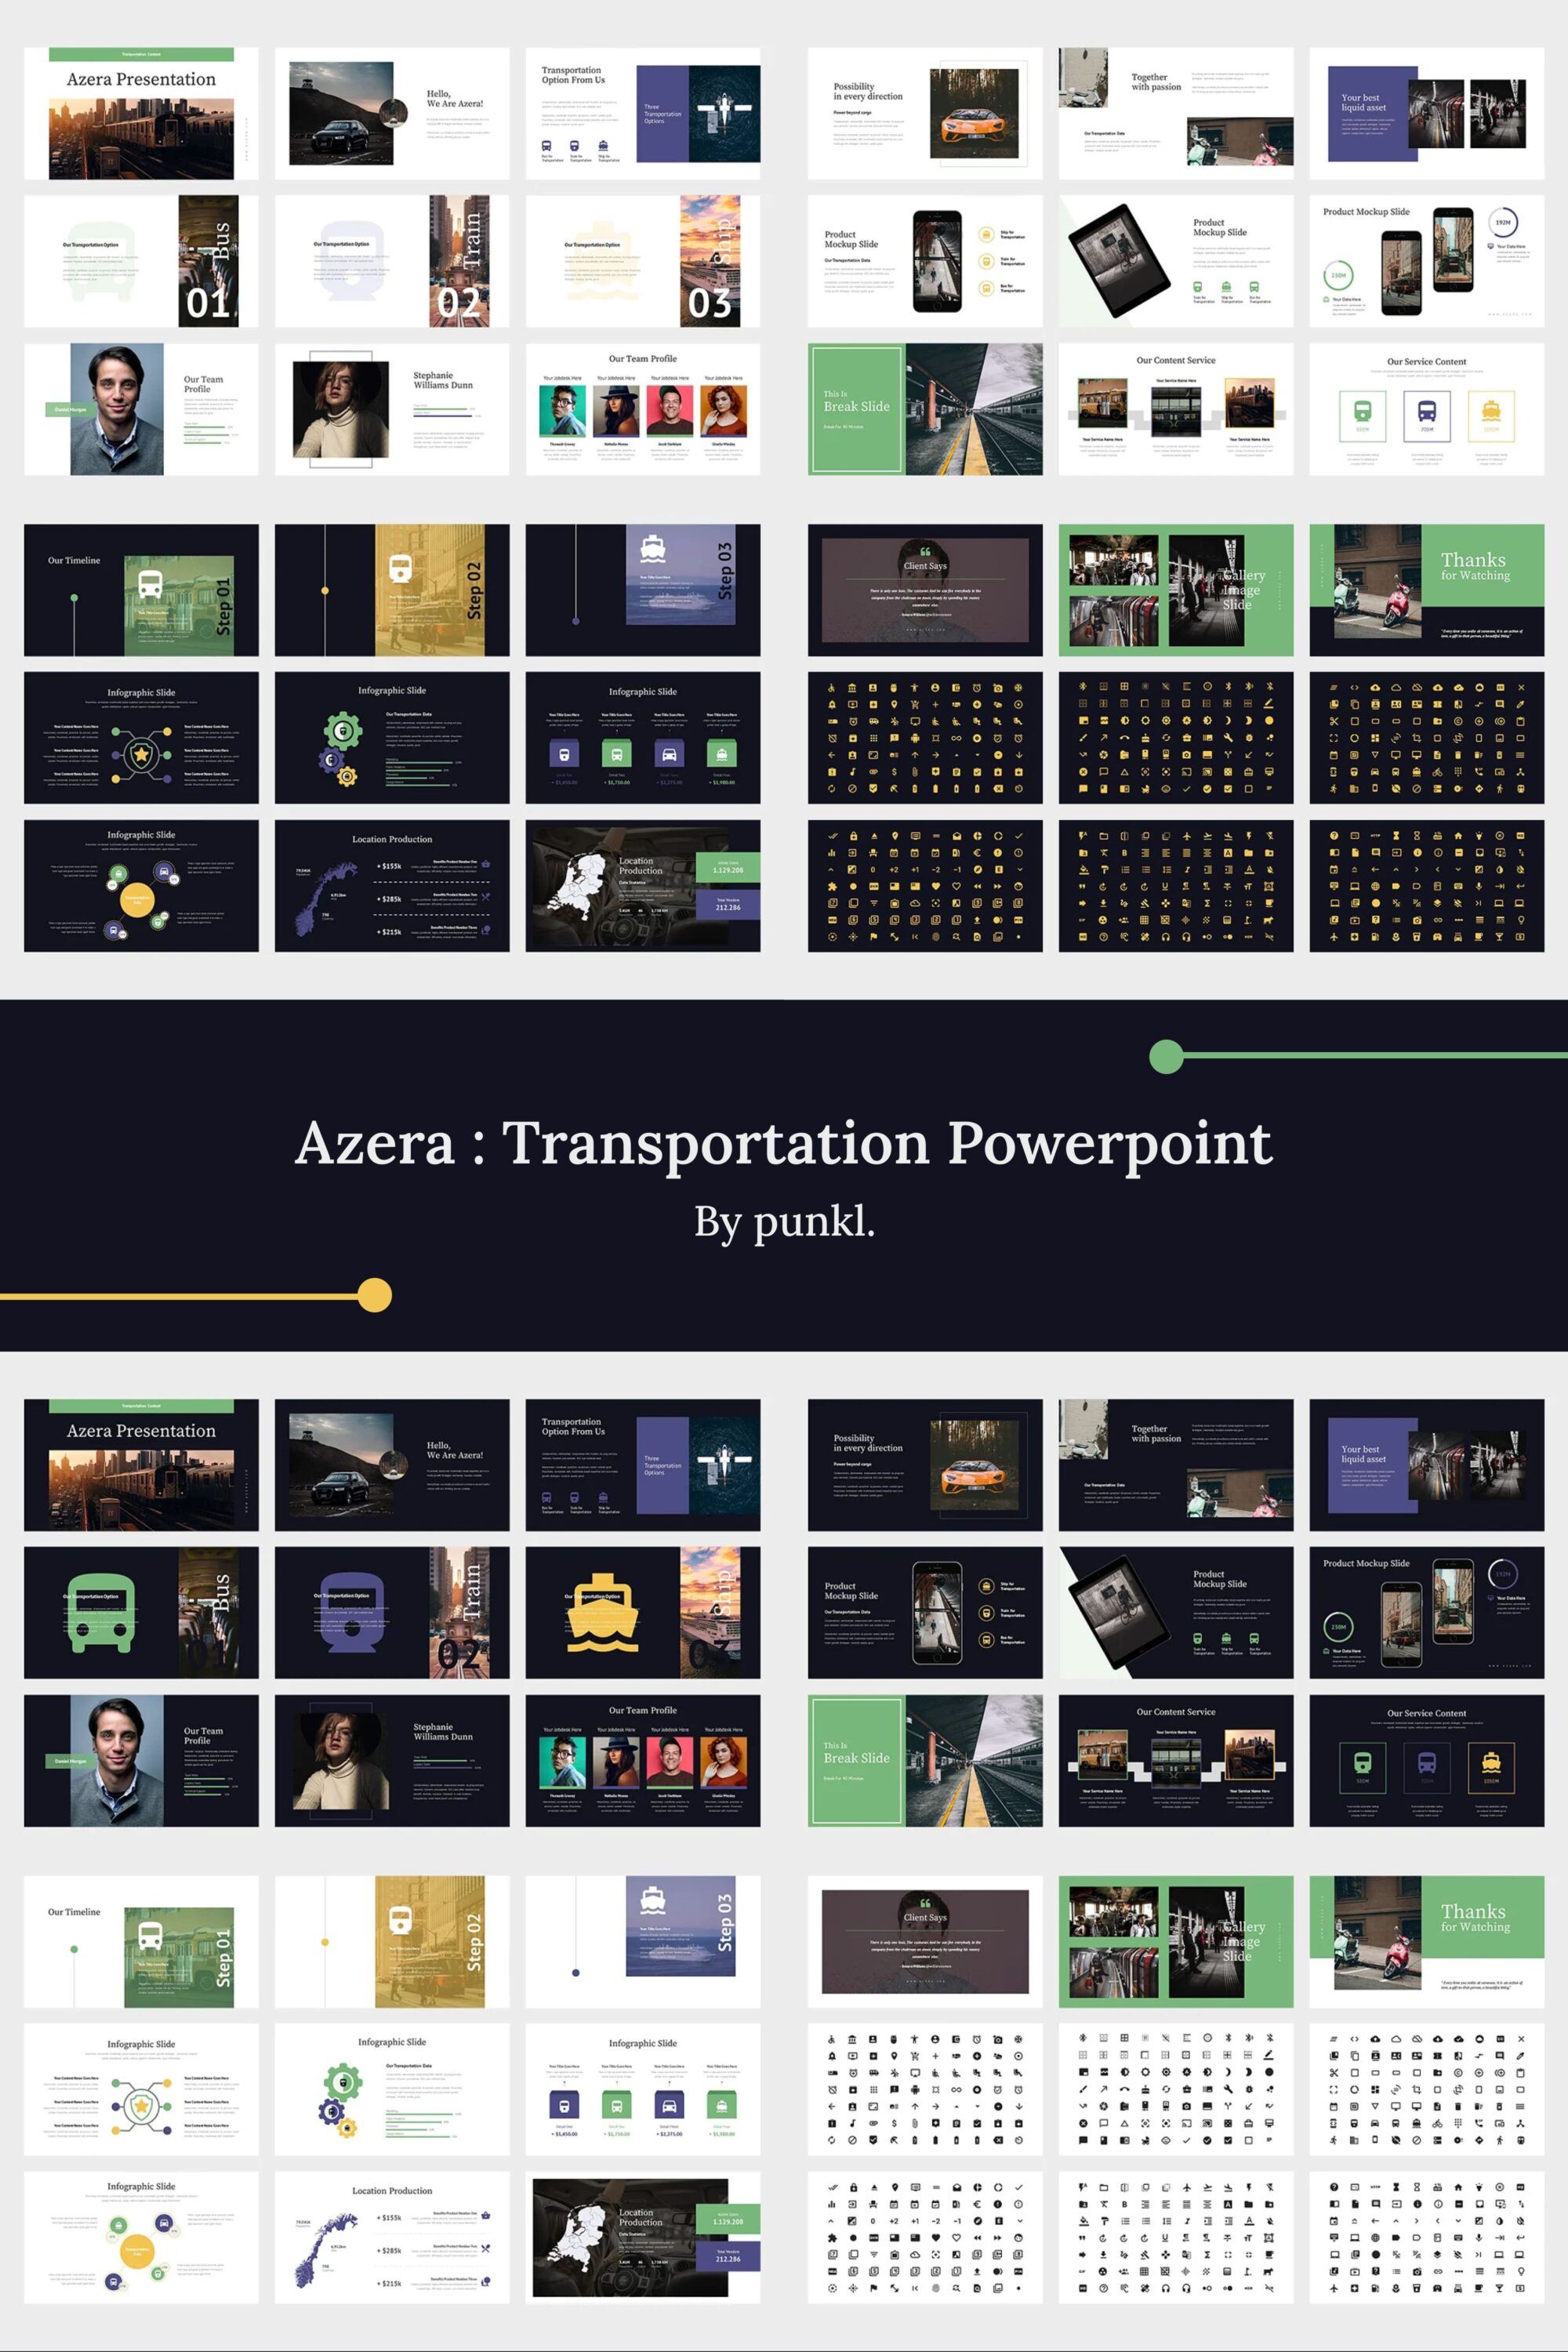 azera transportation powerpoint 03